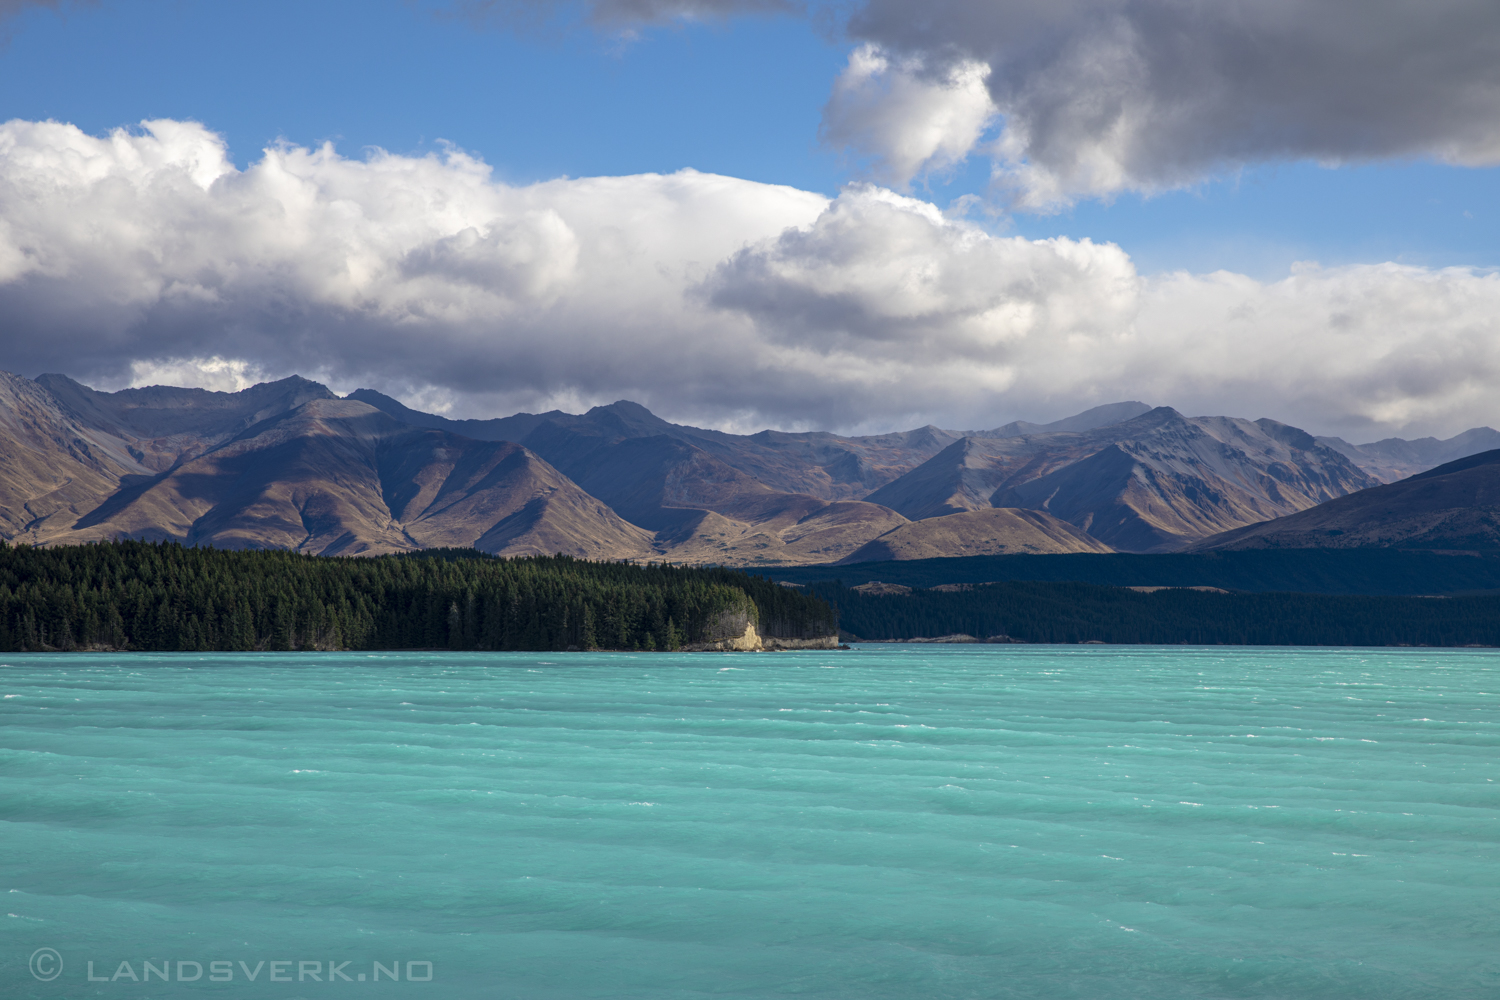 Lake Pukaki, New Zealand. 

(Canon EOS 5D Mark IV / Canon EF 24-70mm f/2.8 L II USM)